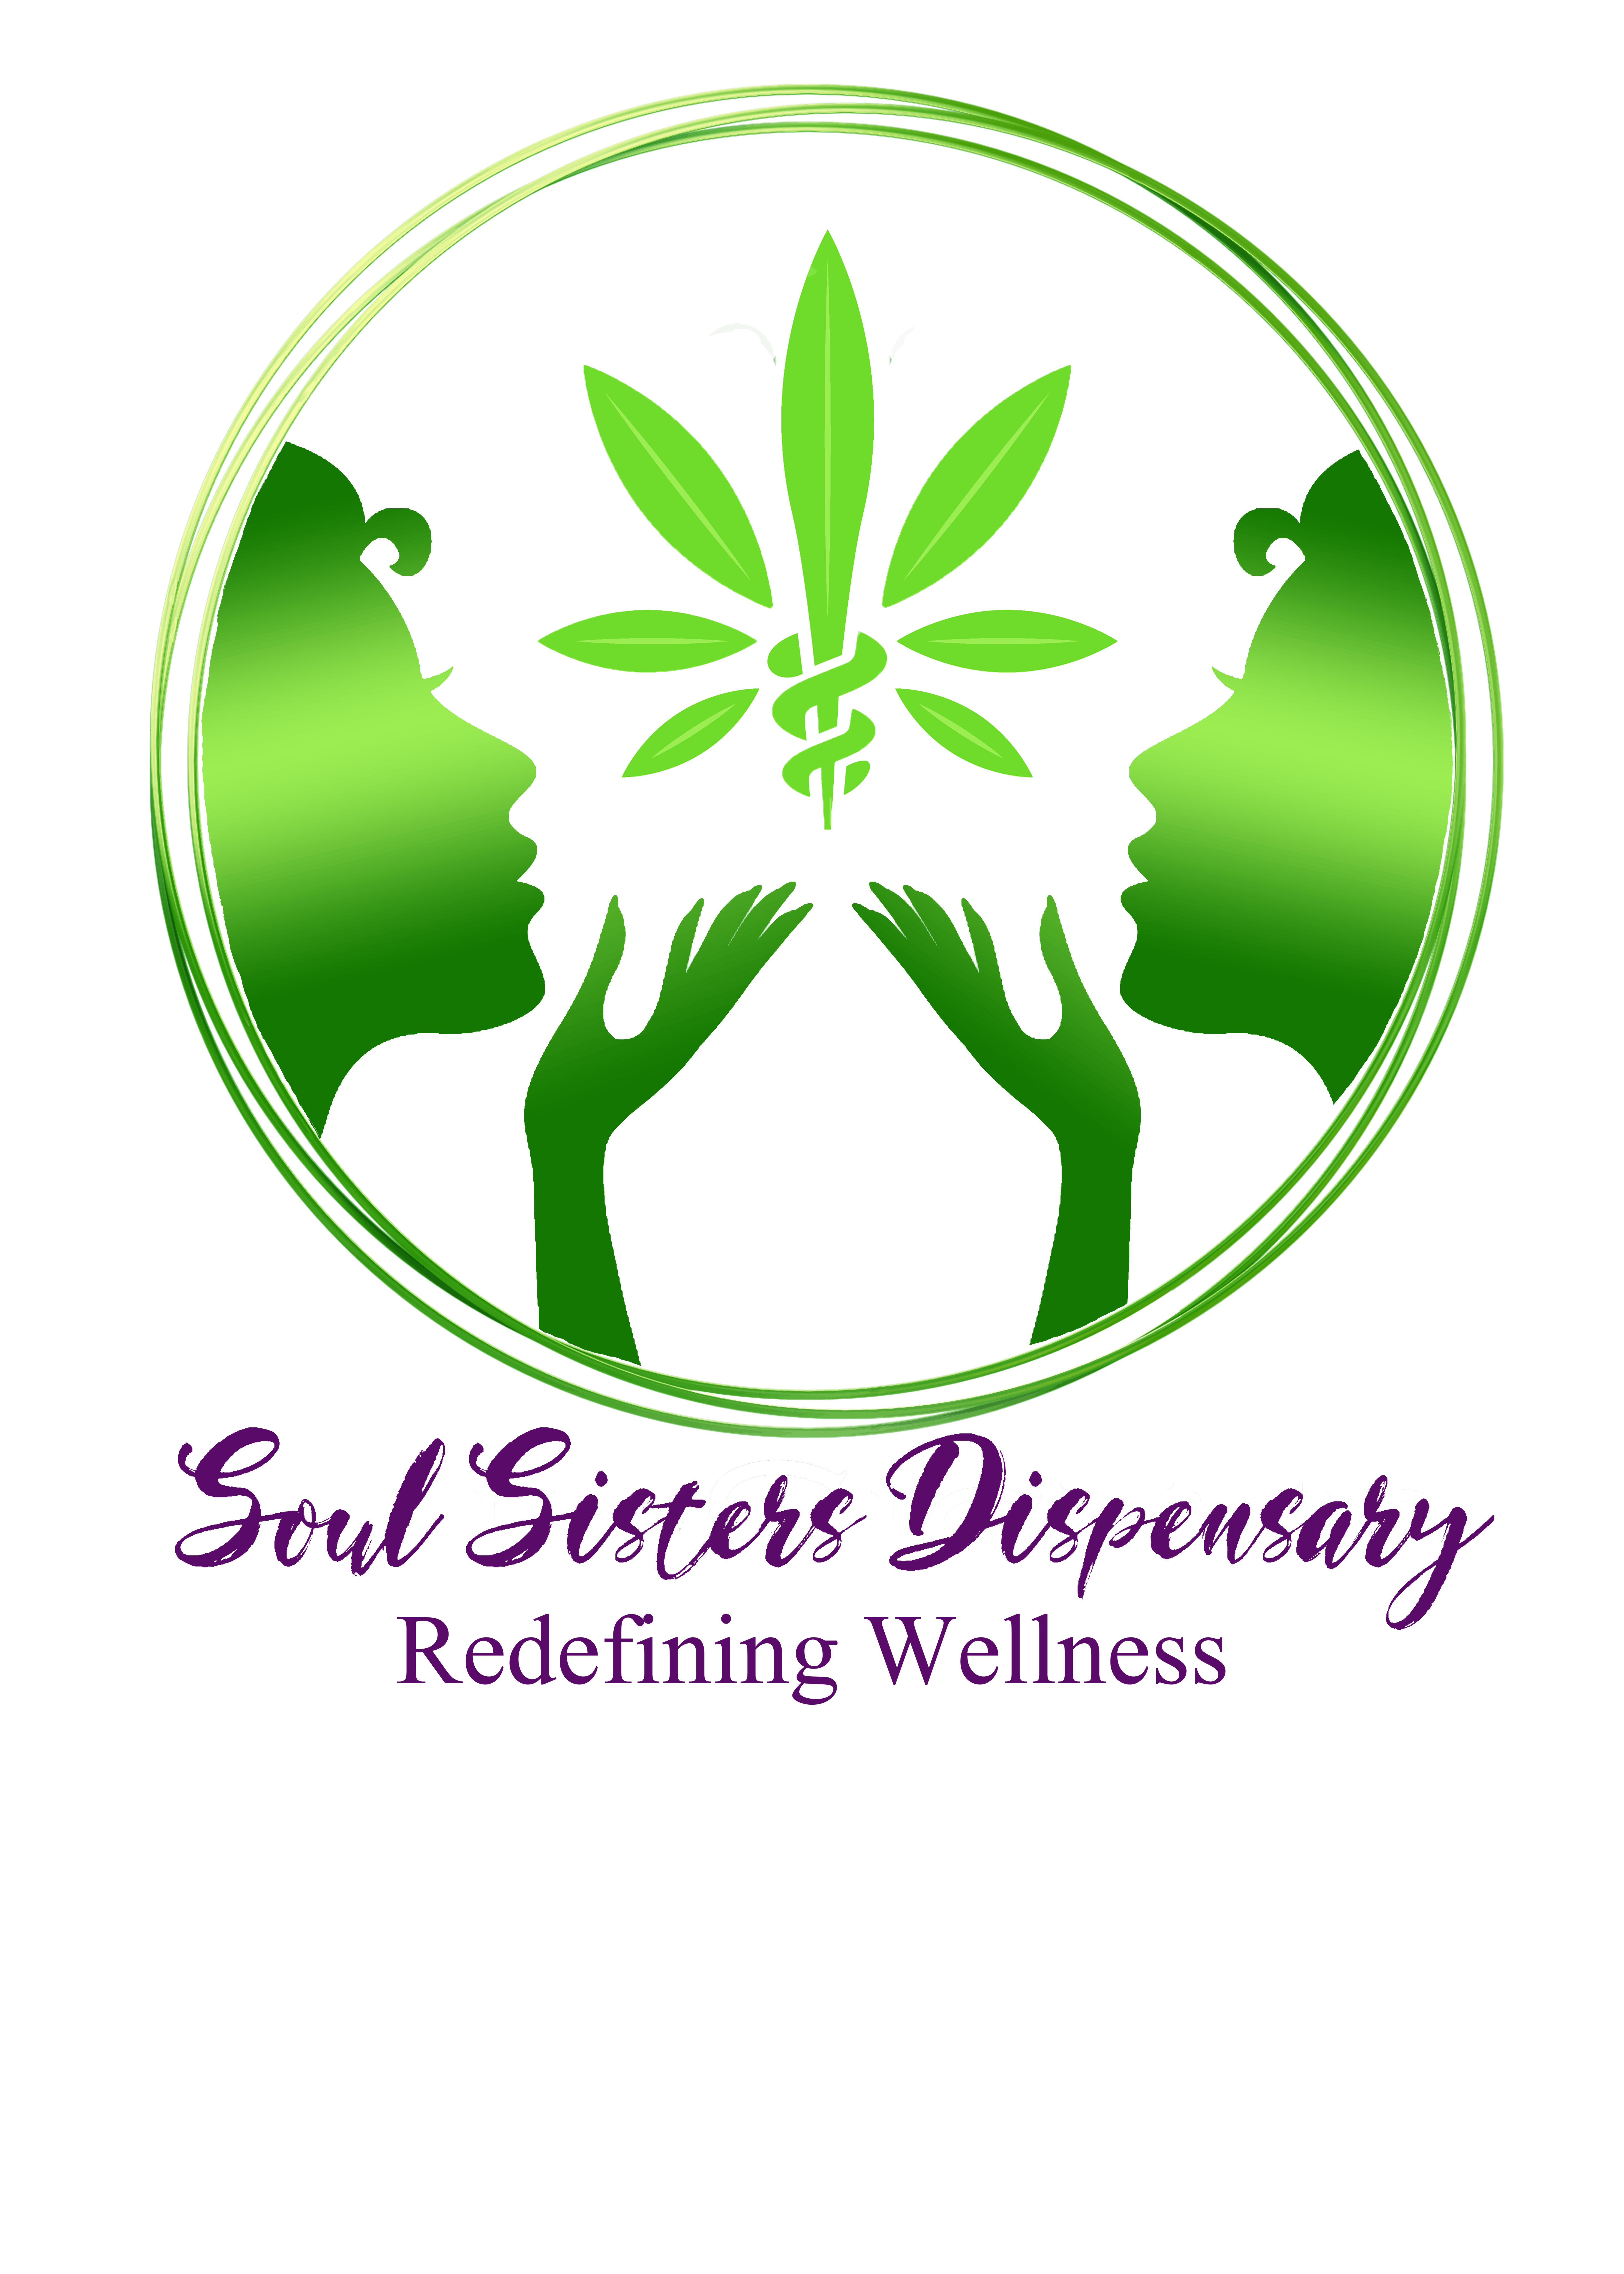 Soul Sisters Dispensary - Medical Marijuana Doctors - Cannabizme.com